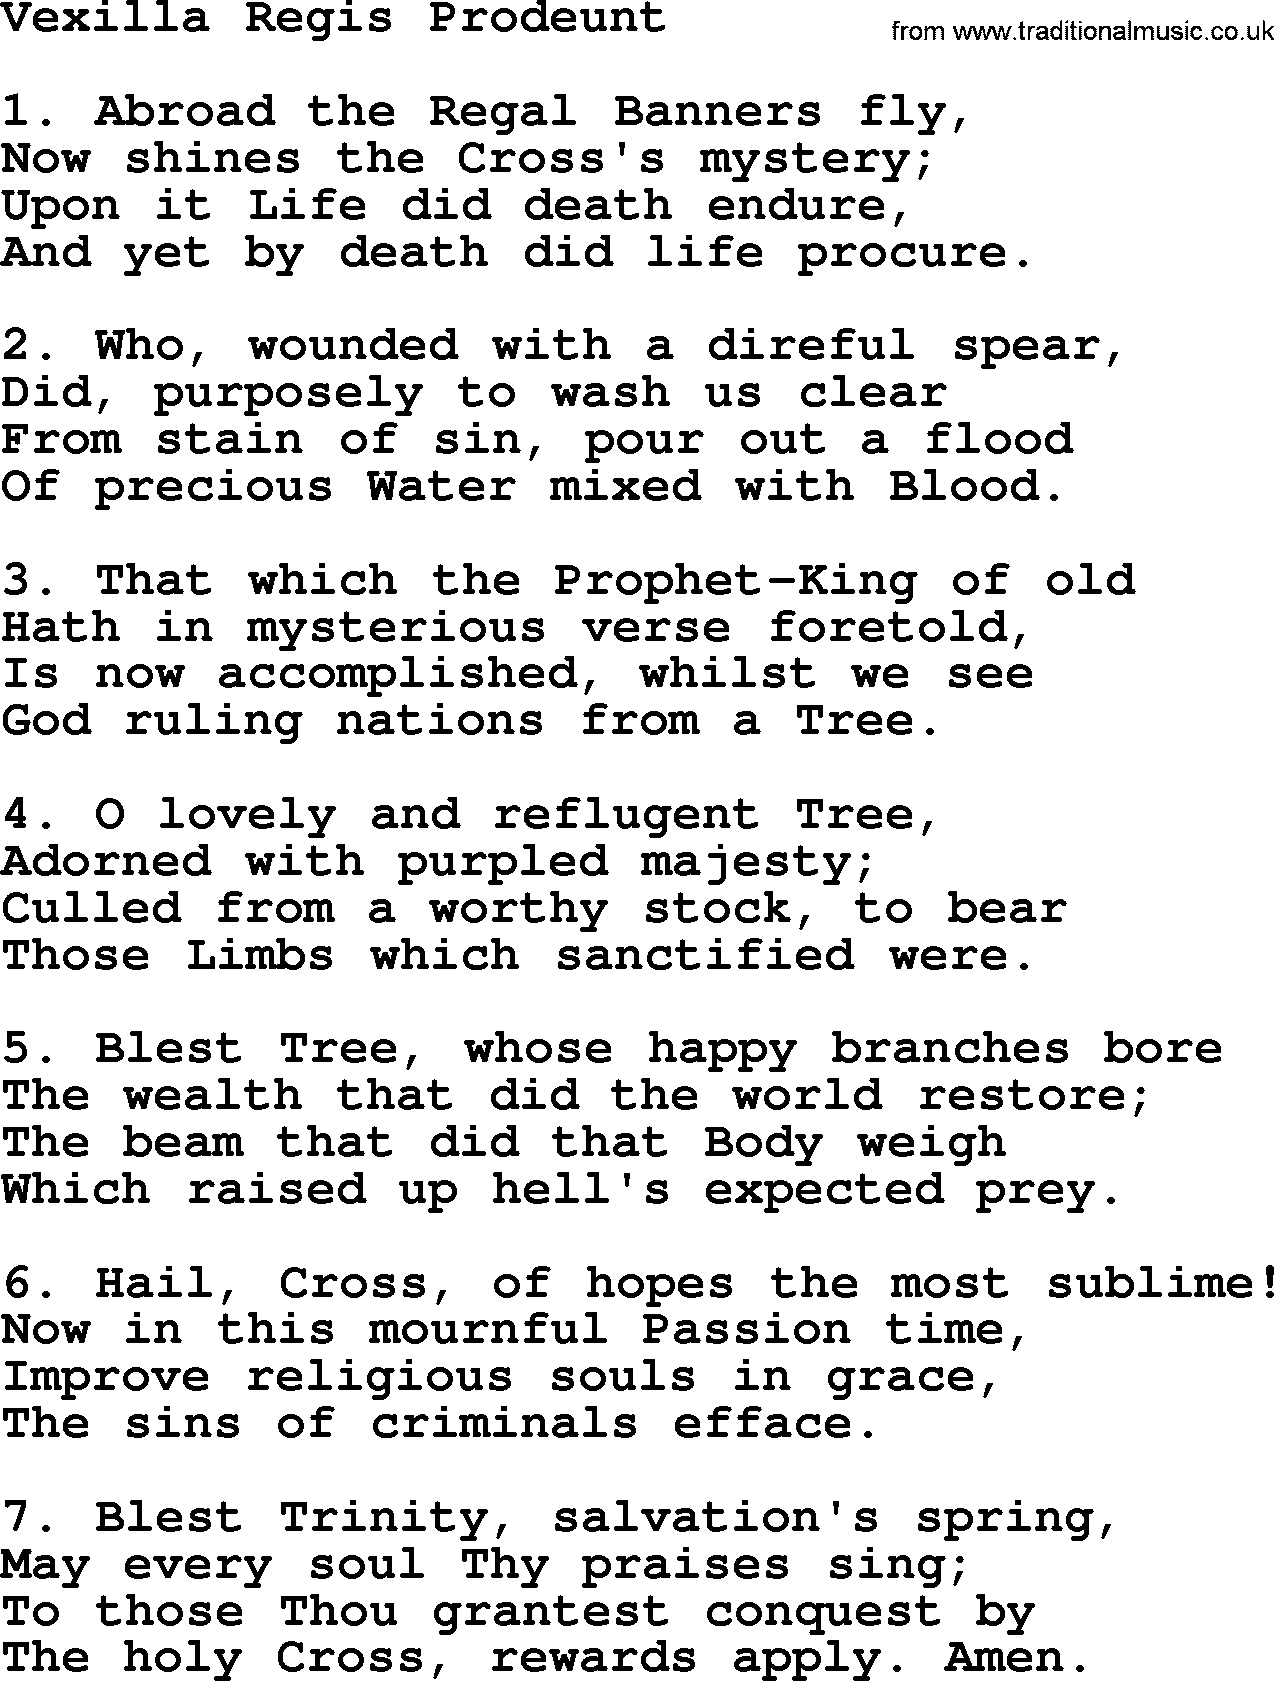 Catholic Hymn: Vexilla Regis Prodeunt lyrics with PDF